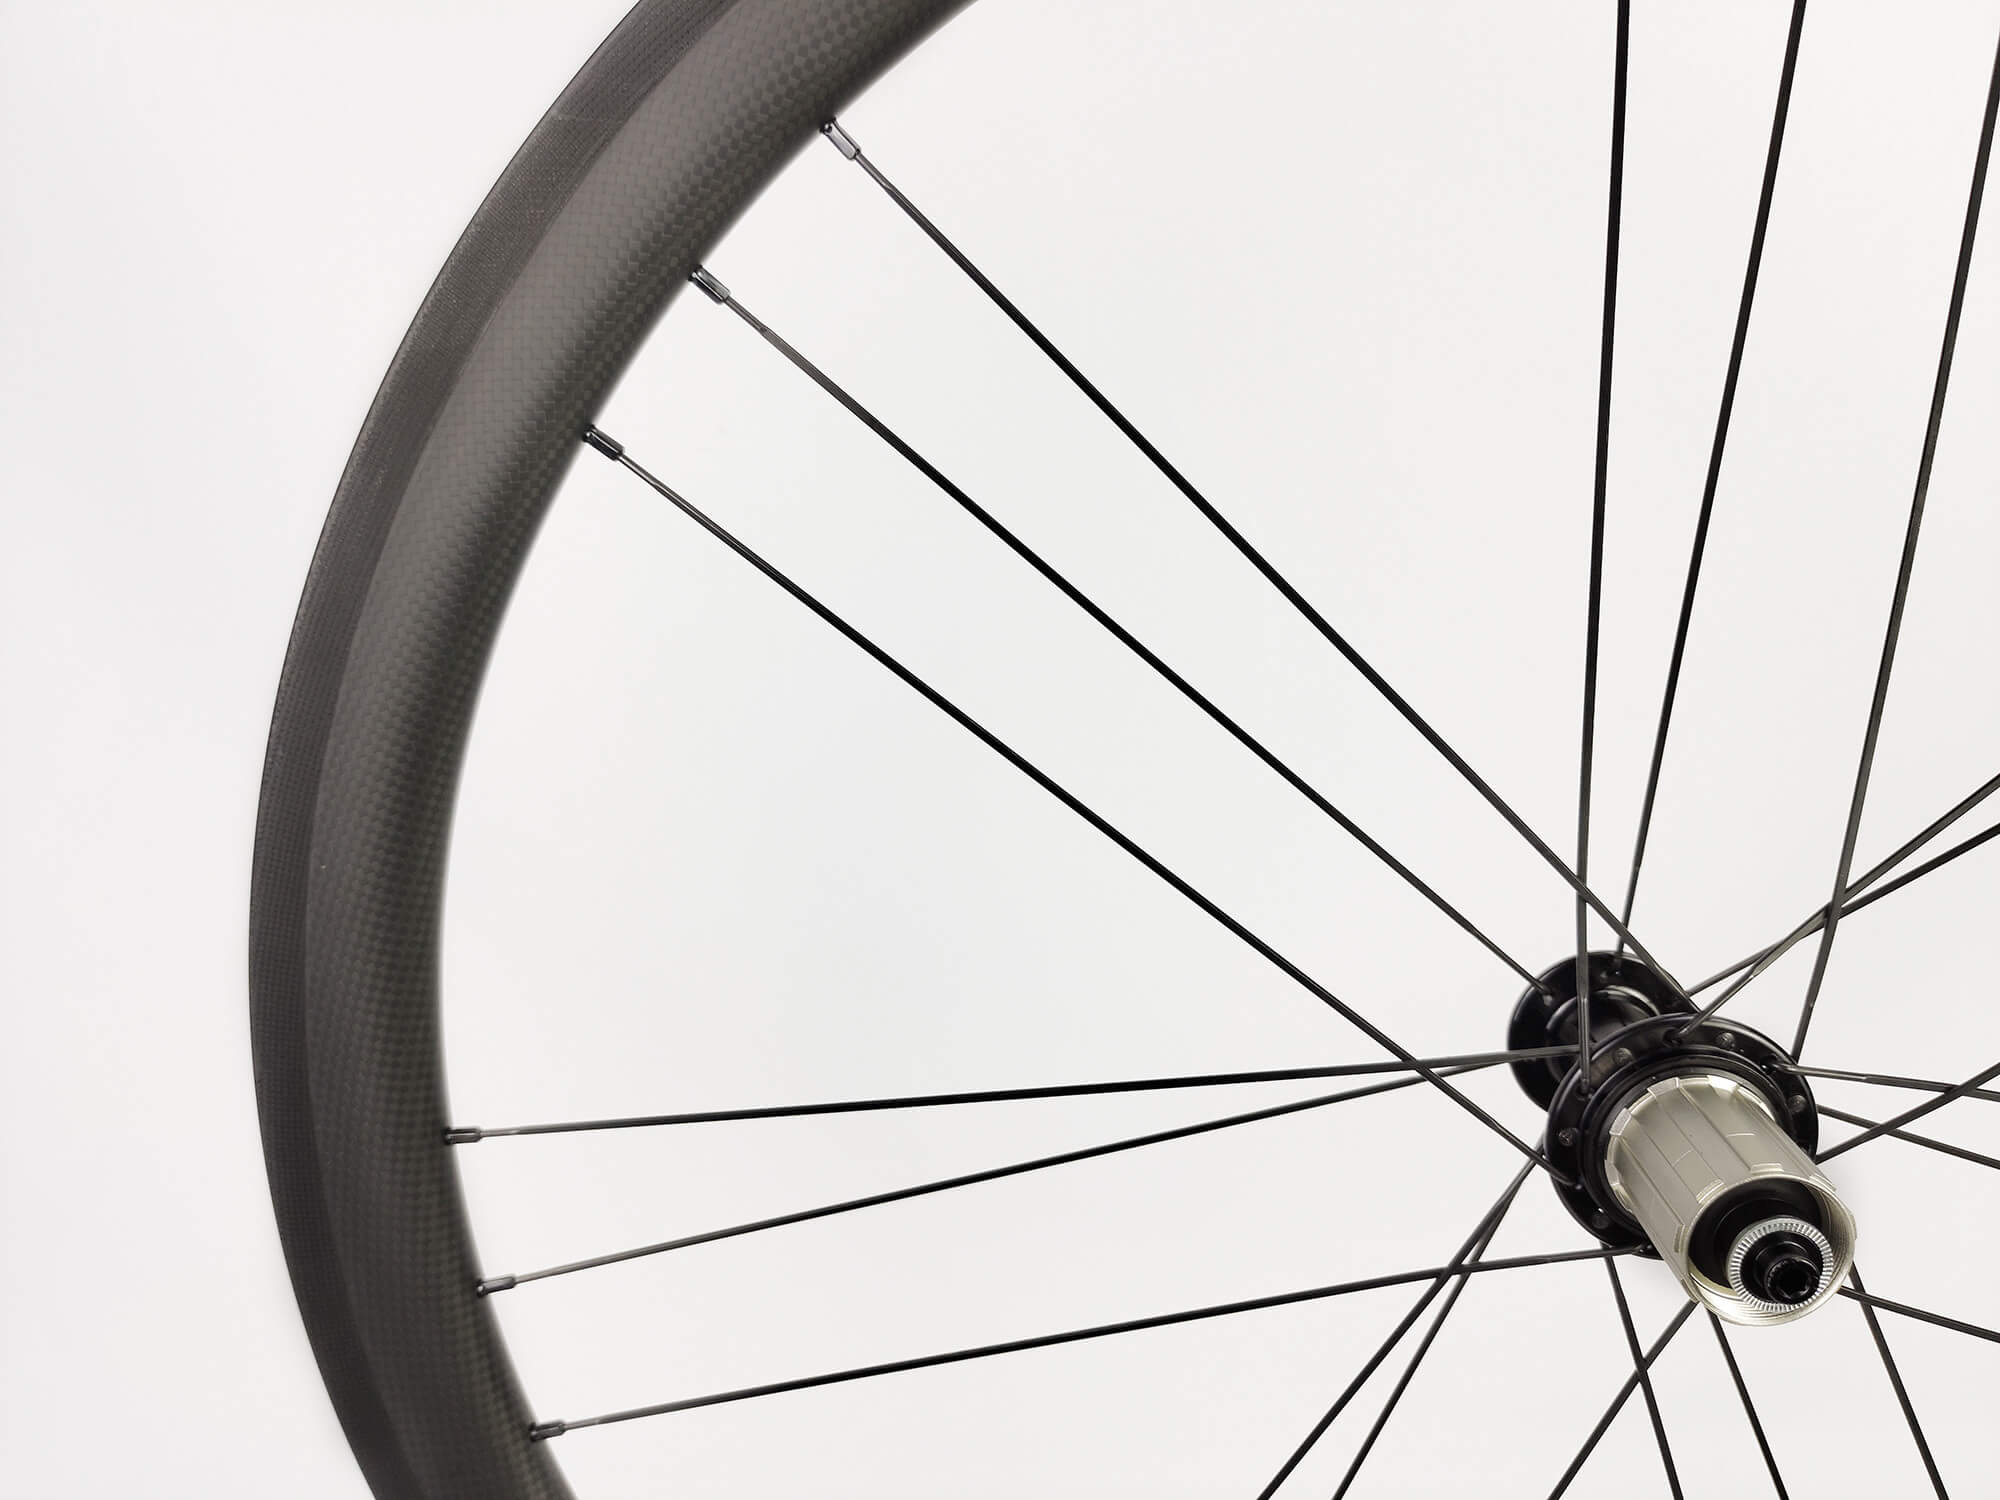 38mm tubular carbon road bicycle wheelset G3 12.jpg